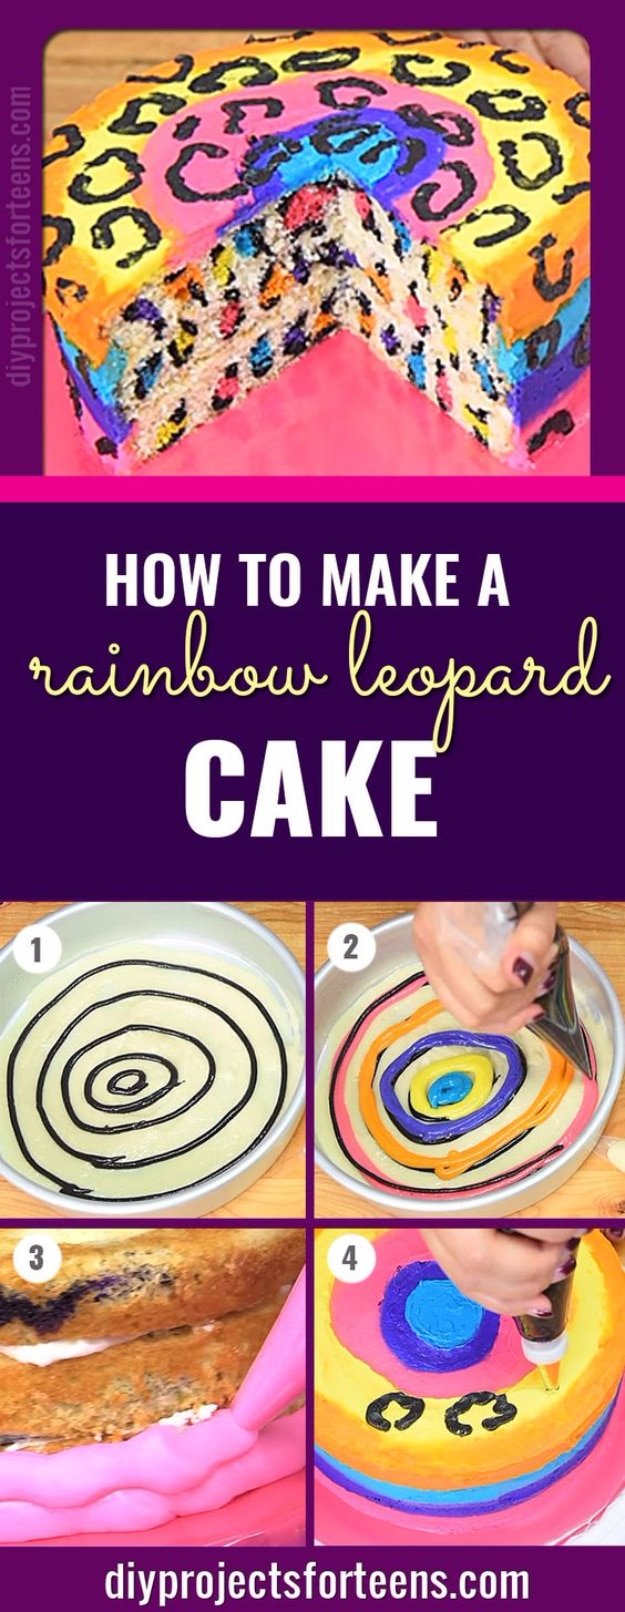 41 Best Homemade Birthday Cake Recipes - Rainbow Leopard Cake - Birthday Cake Recipes From Scratch, Delicious Birthday Cake Recipes To Make, Quick And Easy Birthday Cake Recipes, Awesome Birthday Cake Ideas 